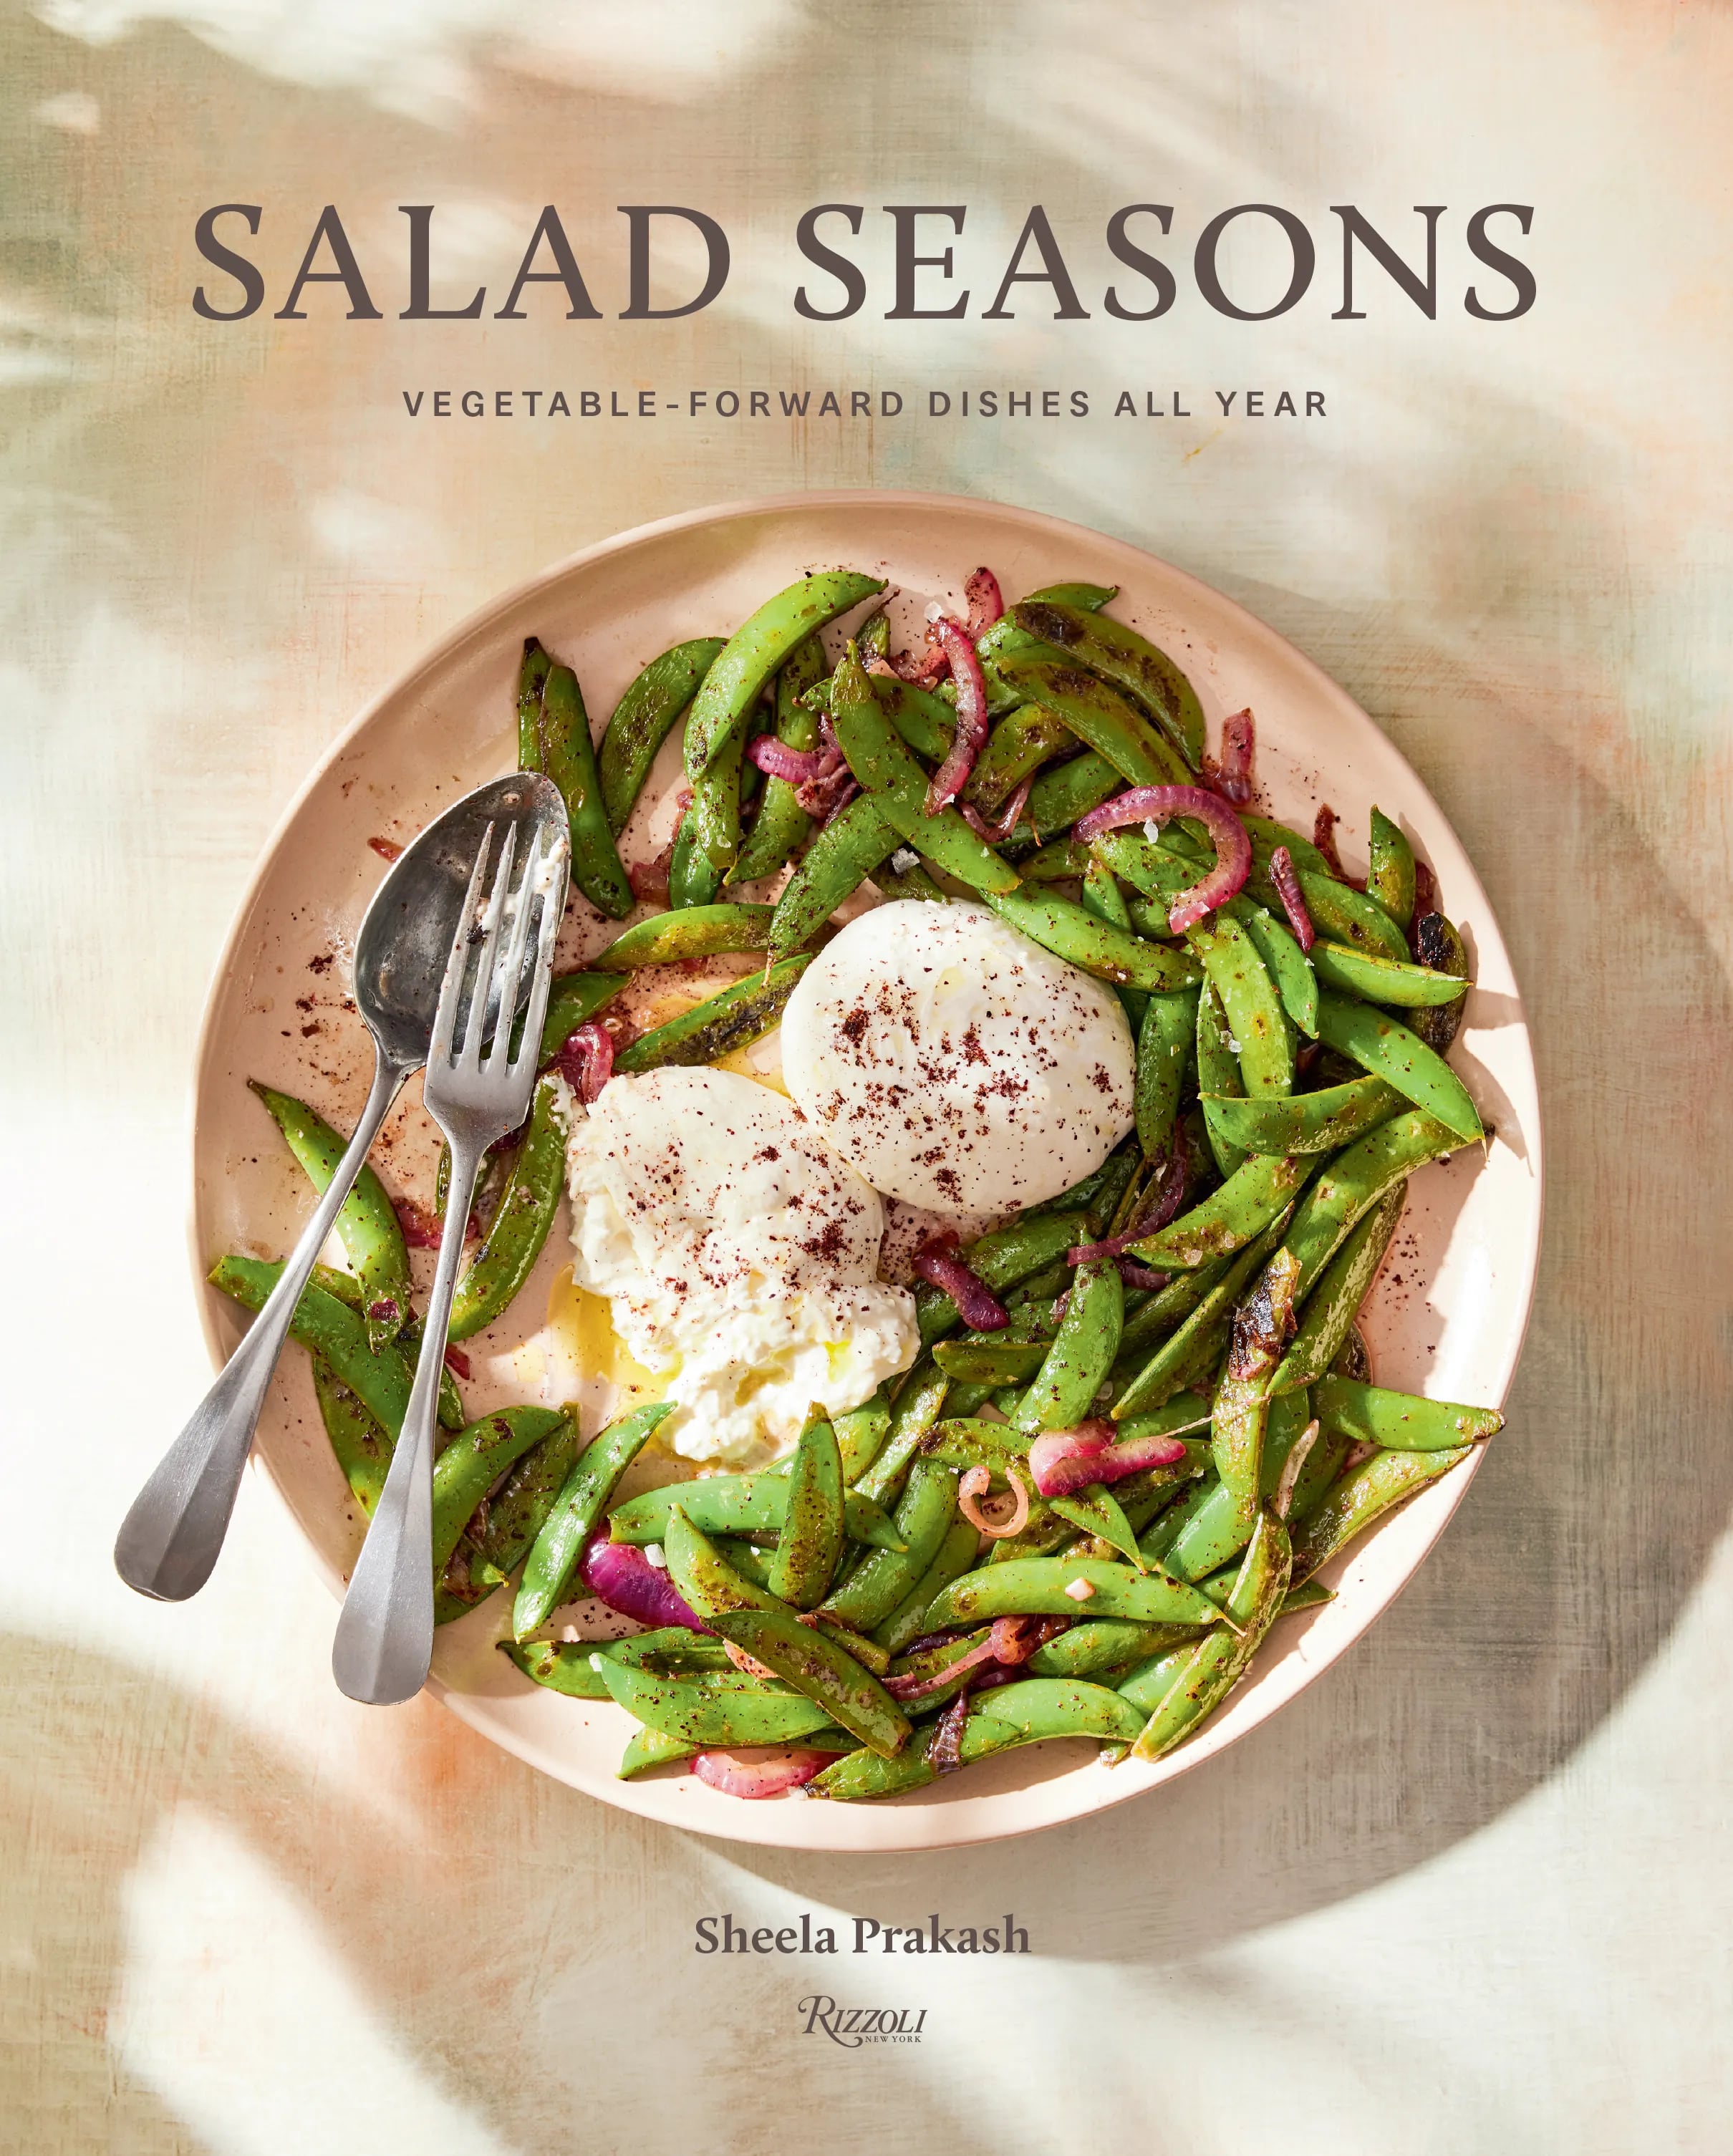 "Salad Seasons: Vegetable-Forward Dishes All Year" by Sheela Prakash.